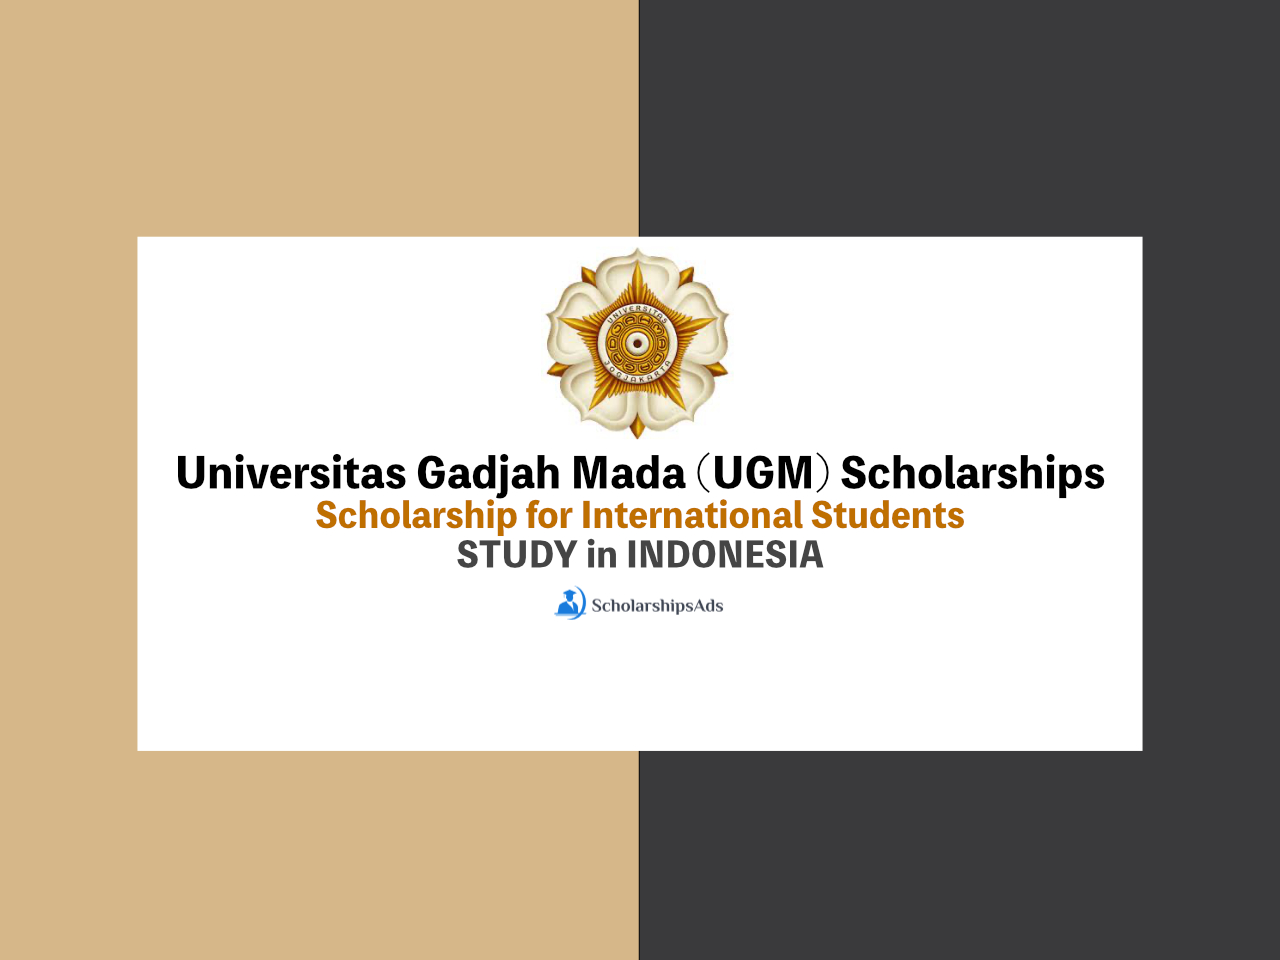 Universitas Gadjah Mada (UGM) Undergraduate Scholarships.